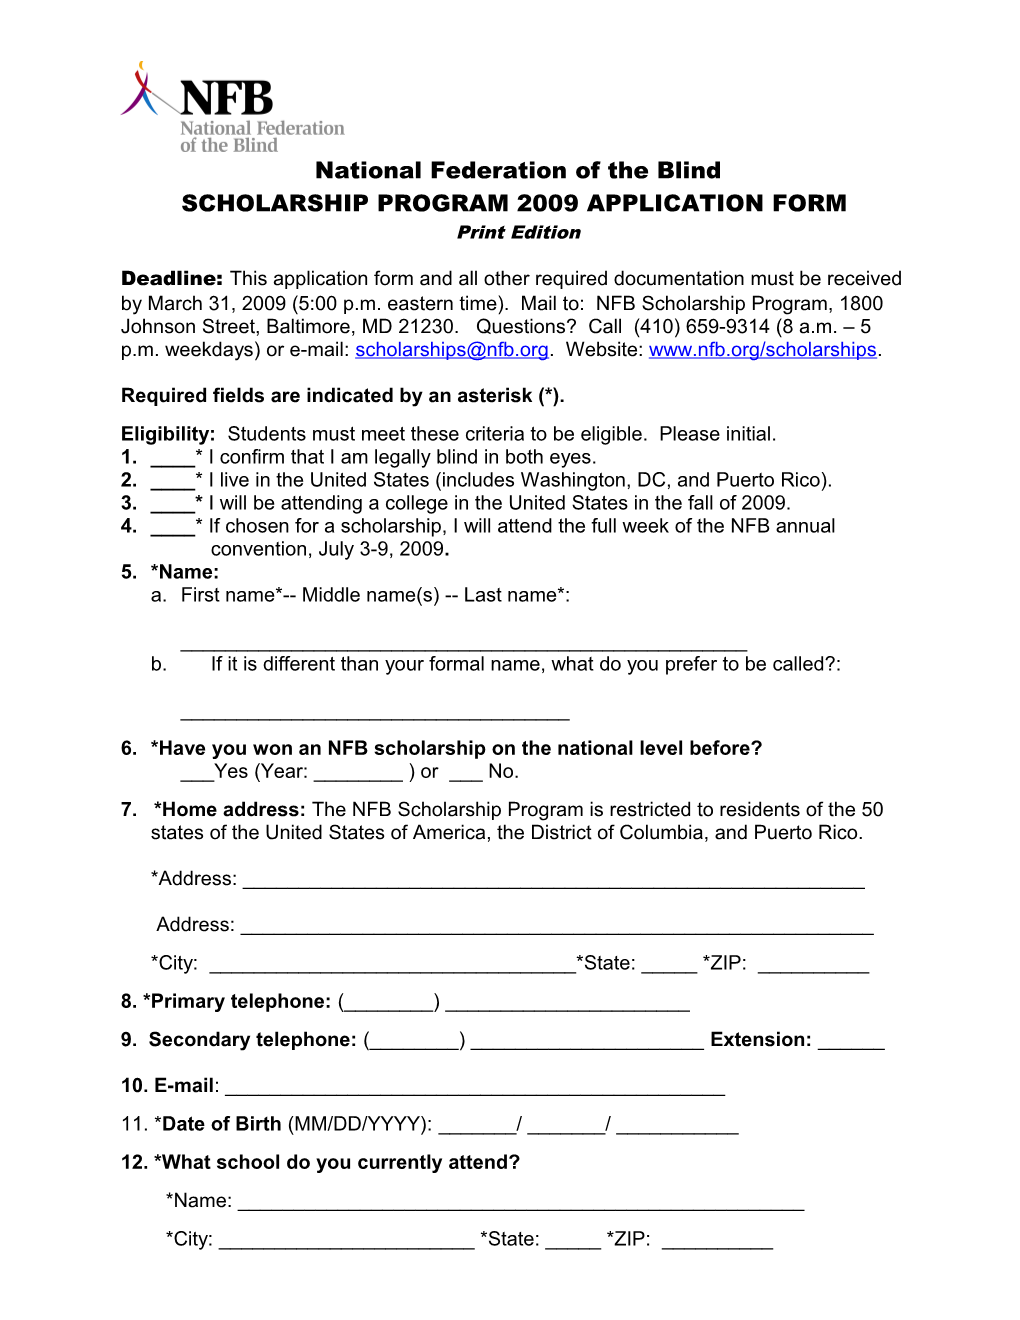 Scholarship Application Form 2009 - Online